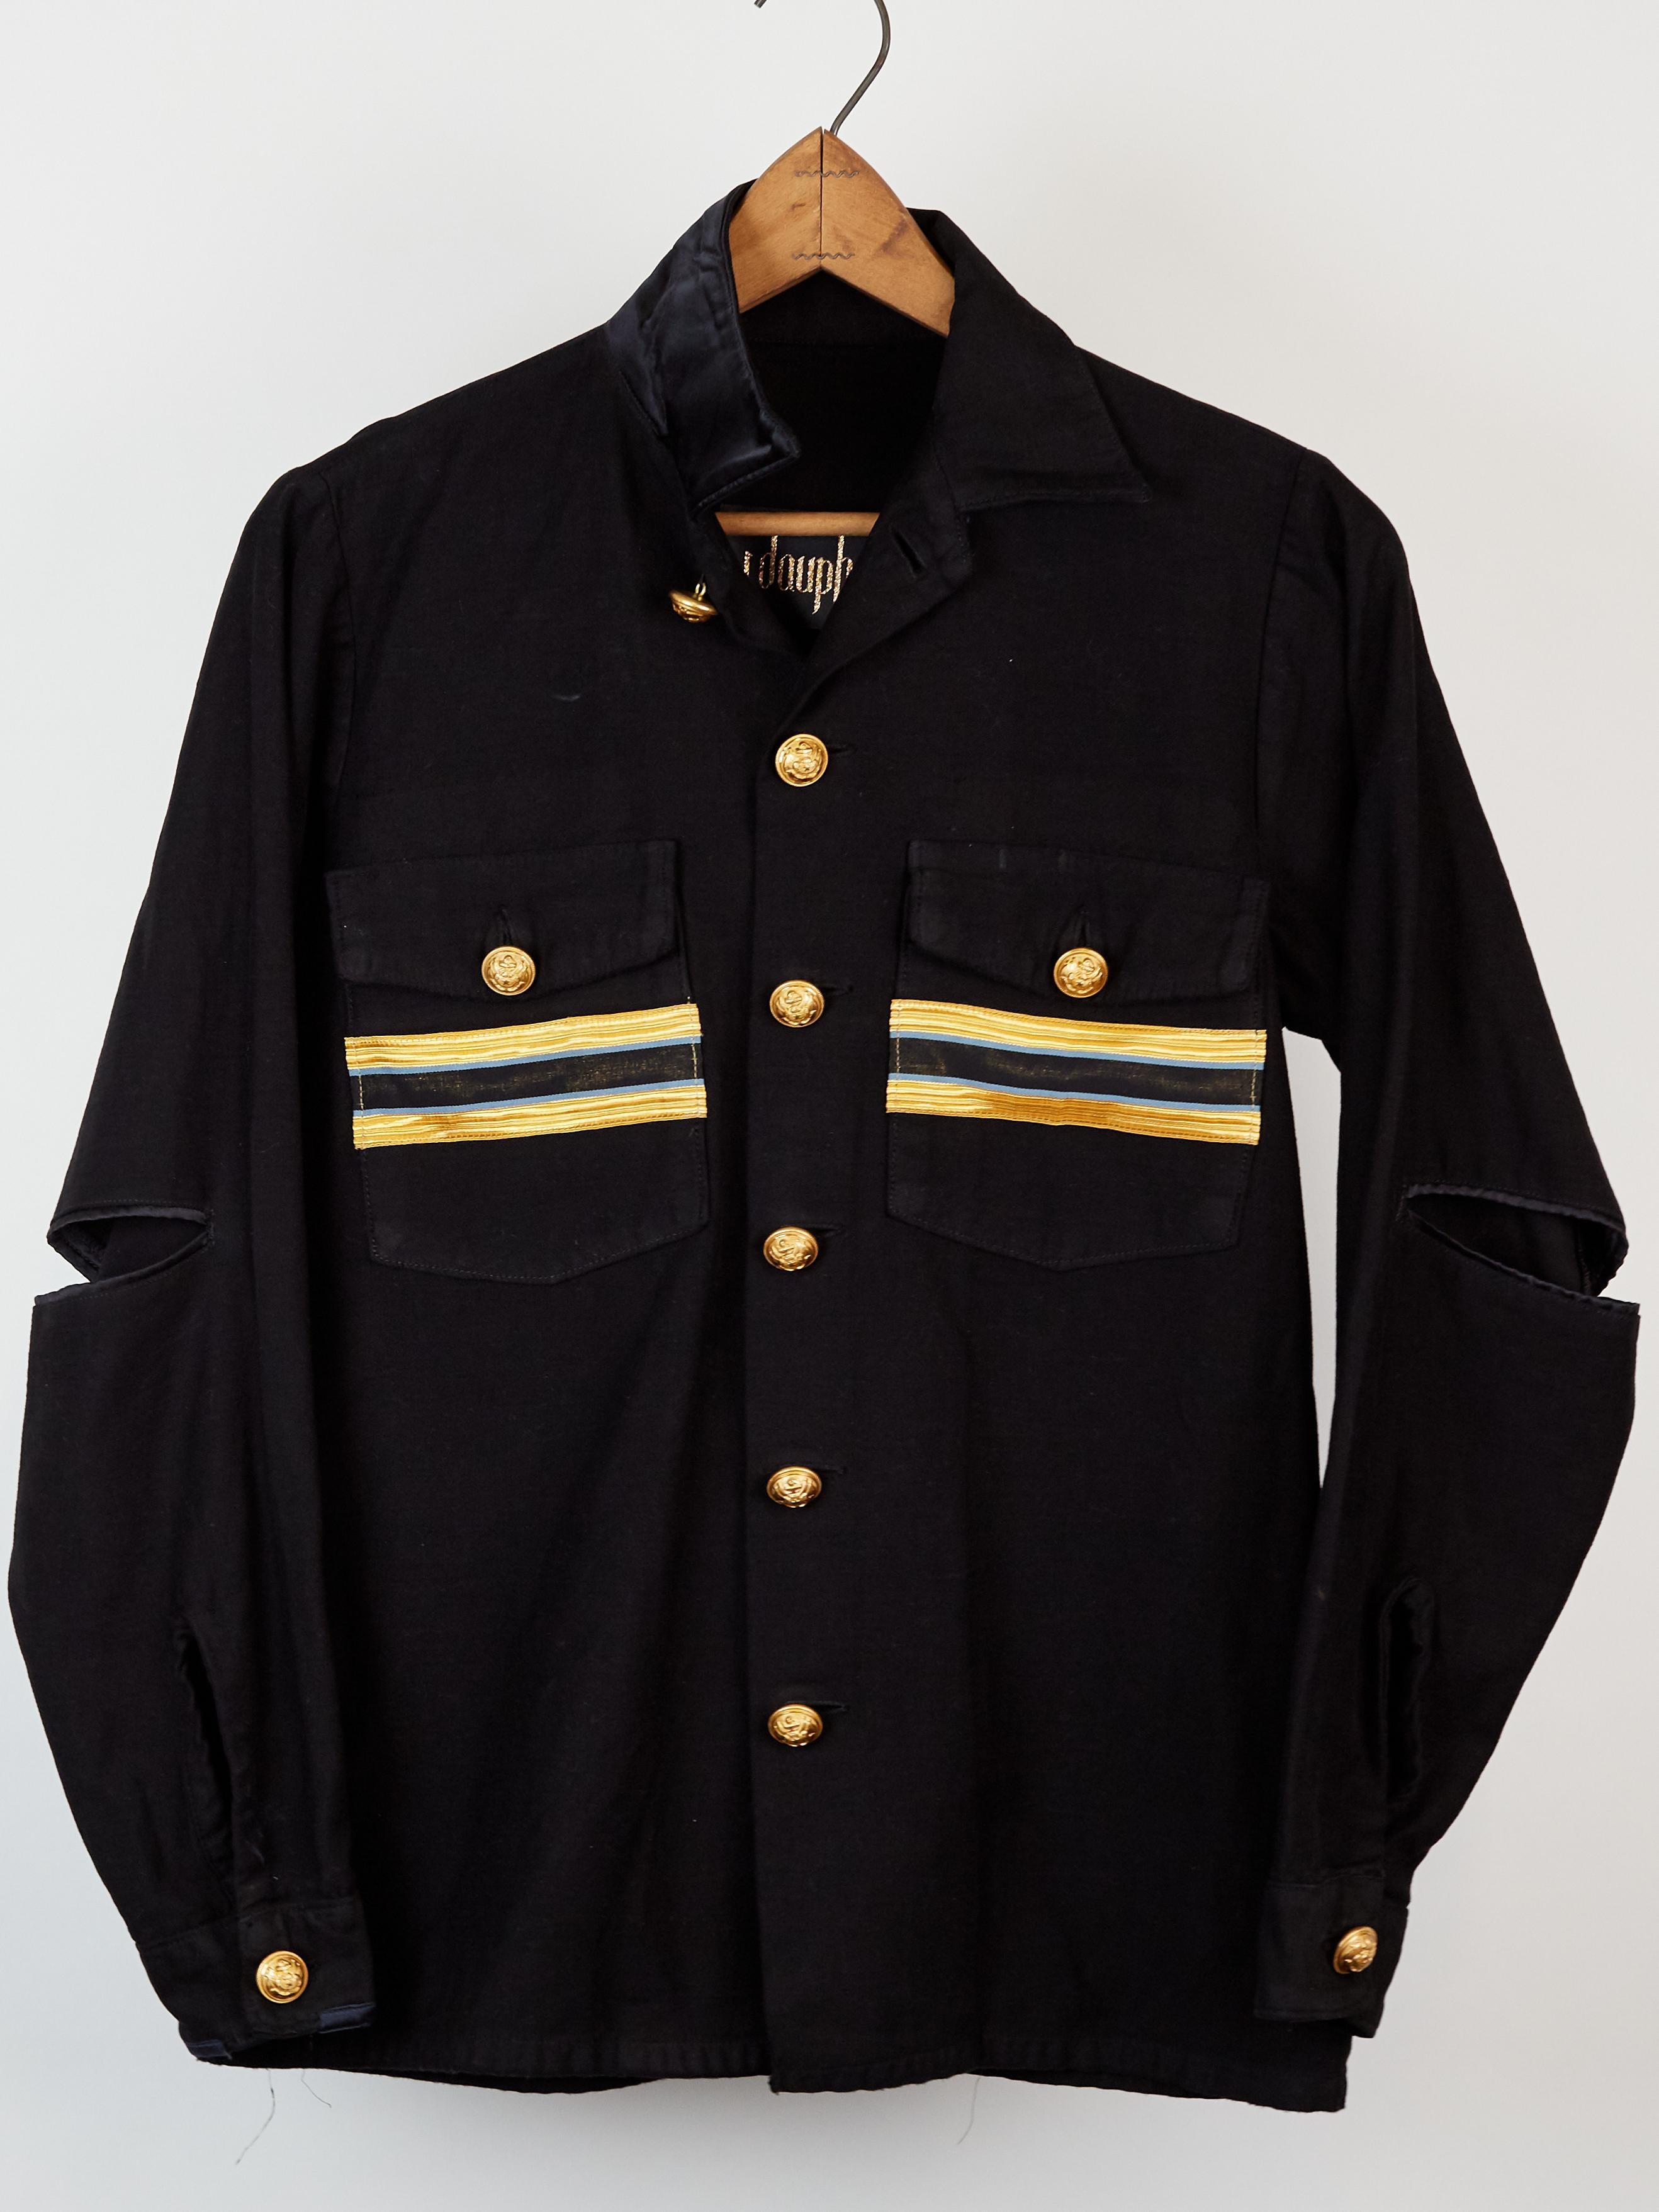 Jacket Military Black Gold Braid Gold Buttons Embellished  J Dauphin 1